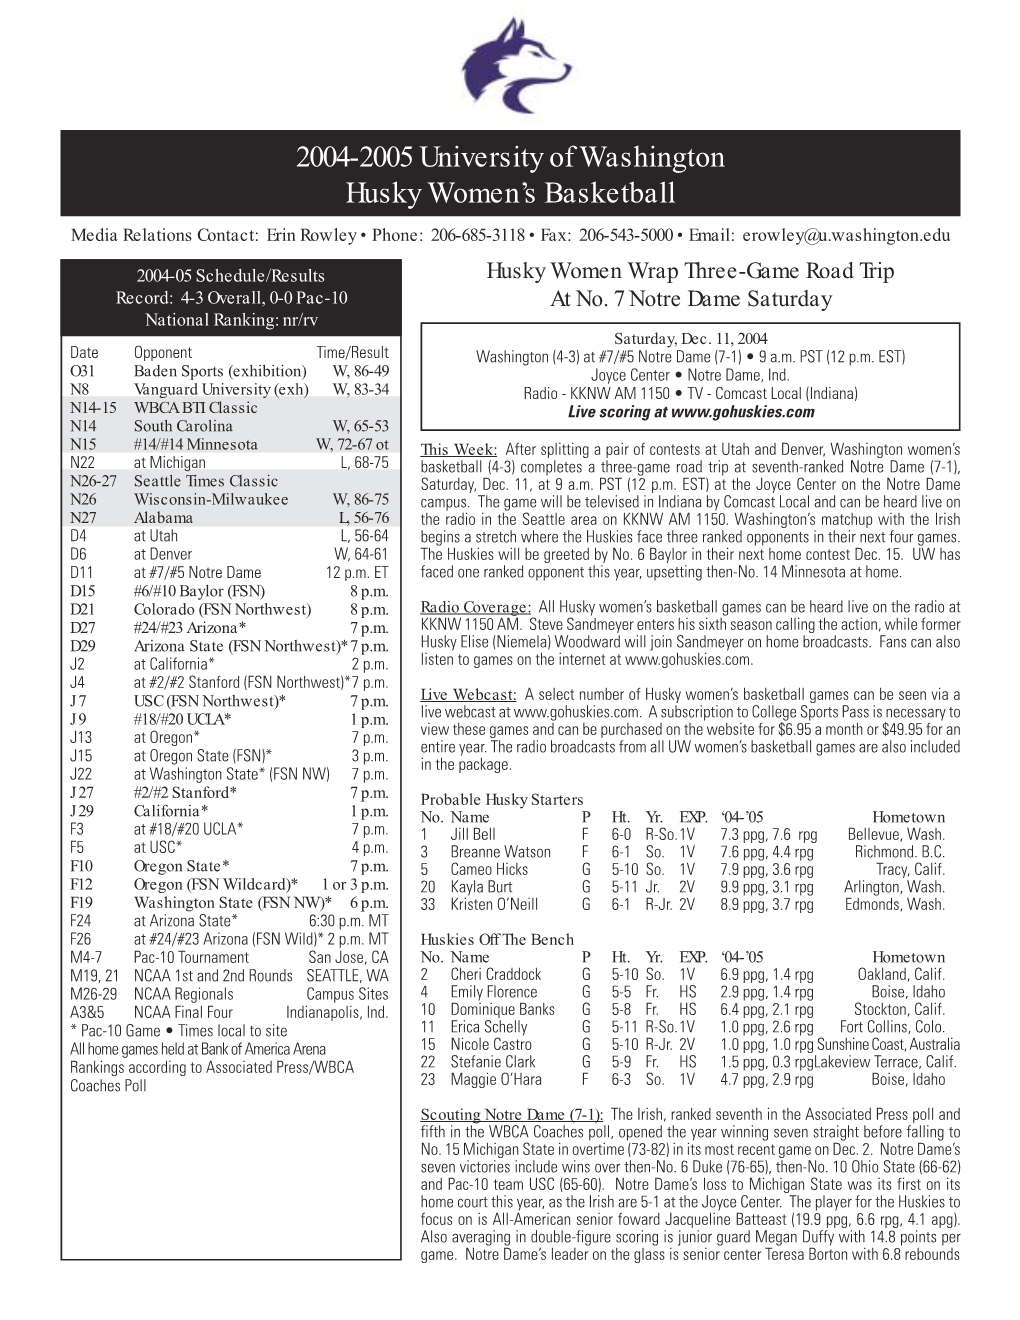 2004-2005 University of Washington Husky Women's Basketball